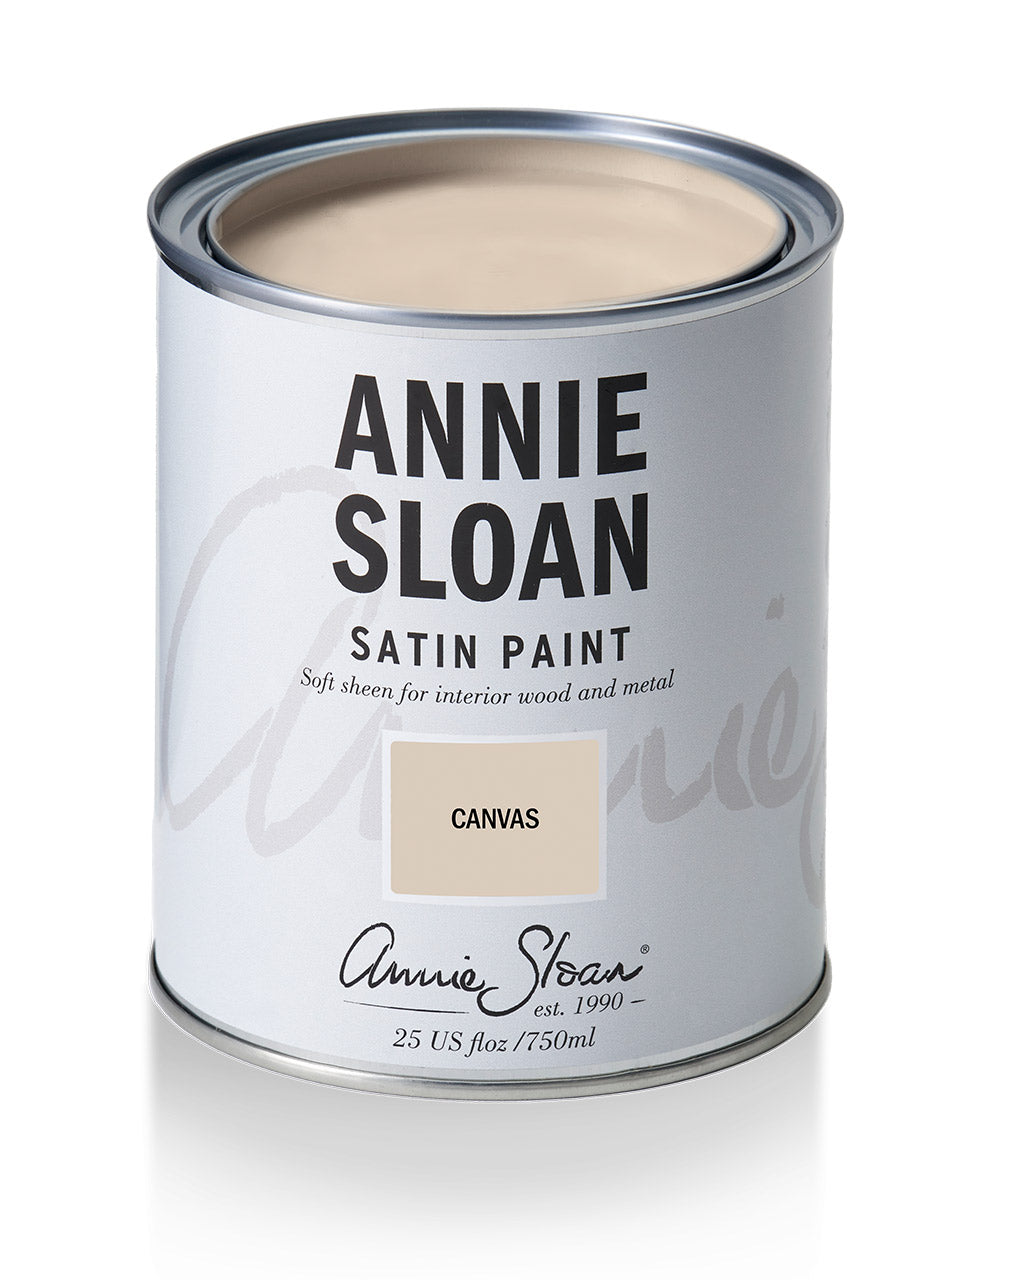 Canvas Satin Paint by Annie Sloan